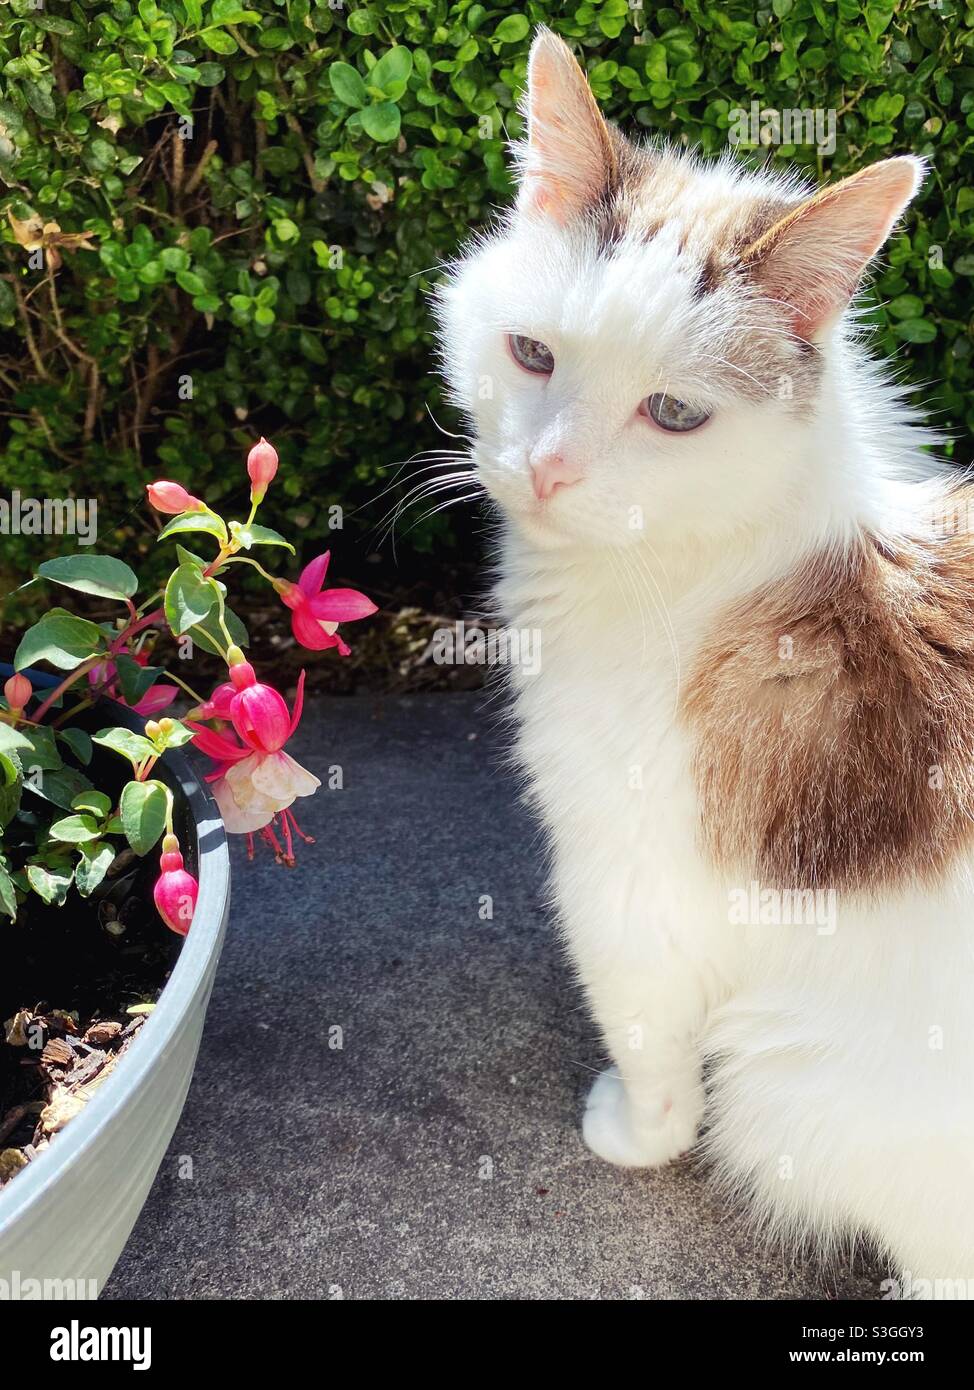 A cute cat in a garden next to a pot of fuschia flowers. Stock Photo